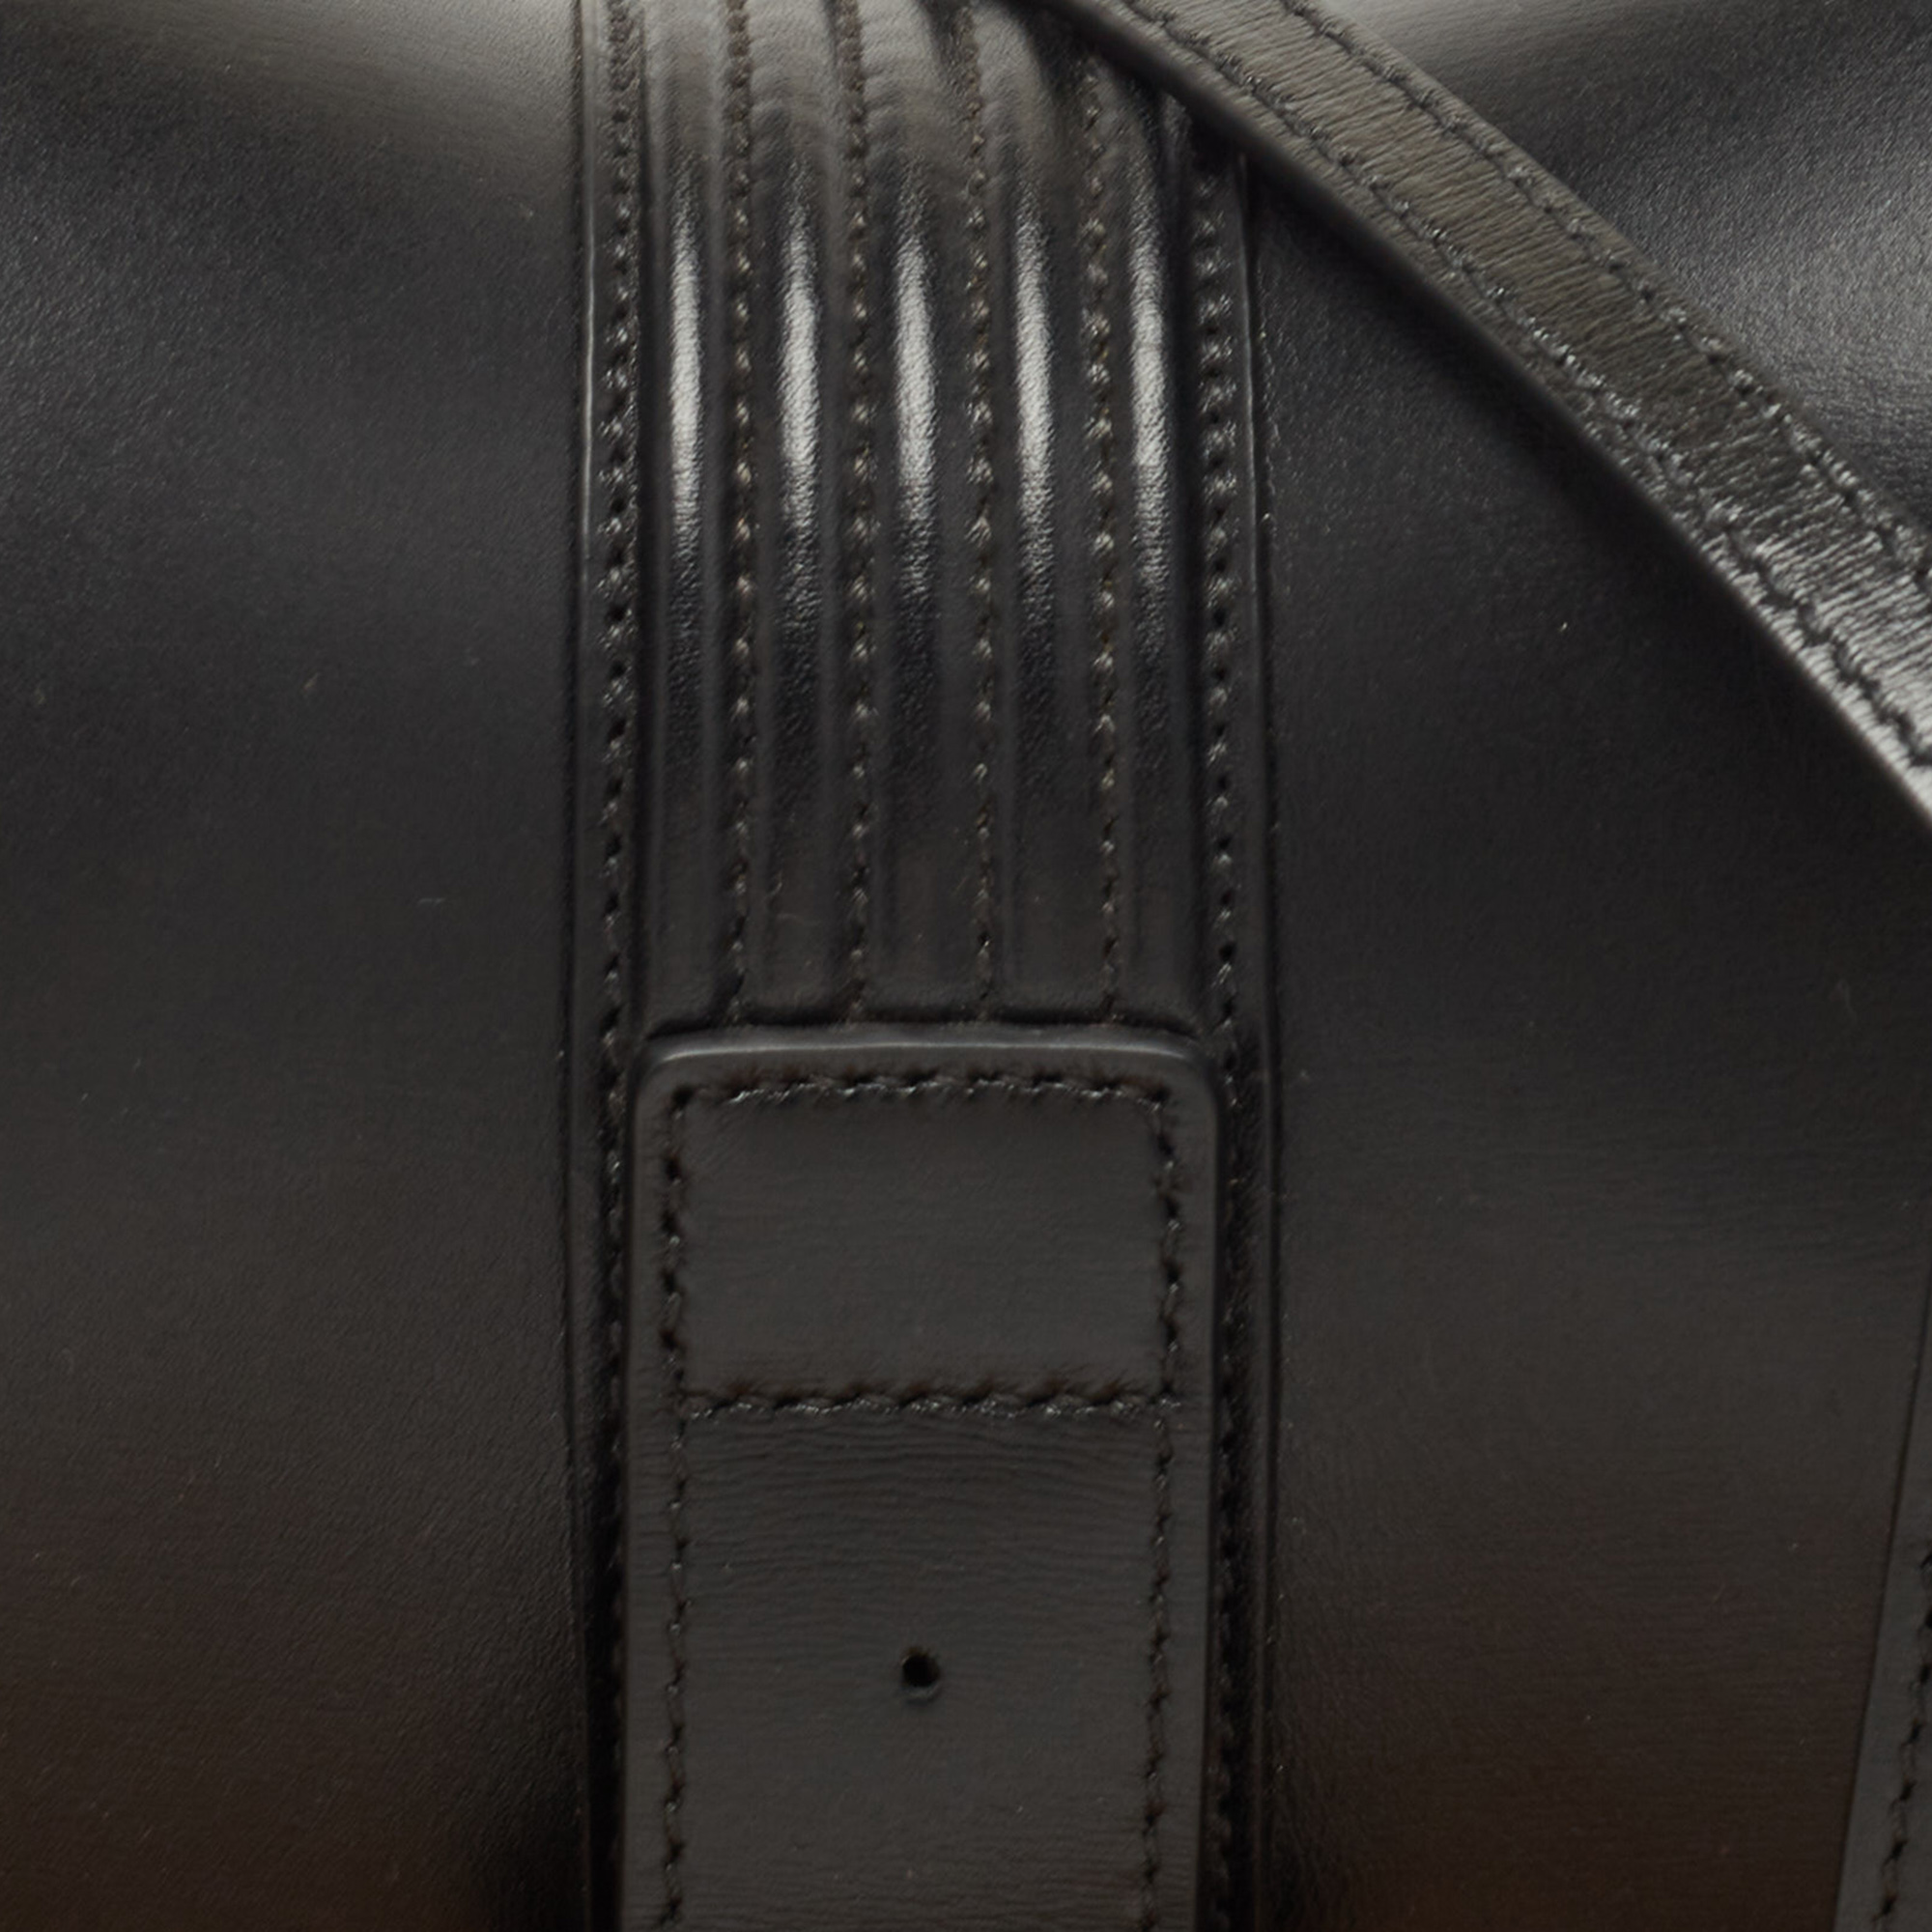 Alaia Black Leather Edition 1992 Corset Bag